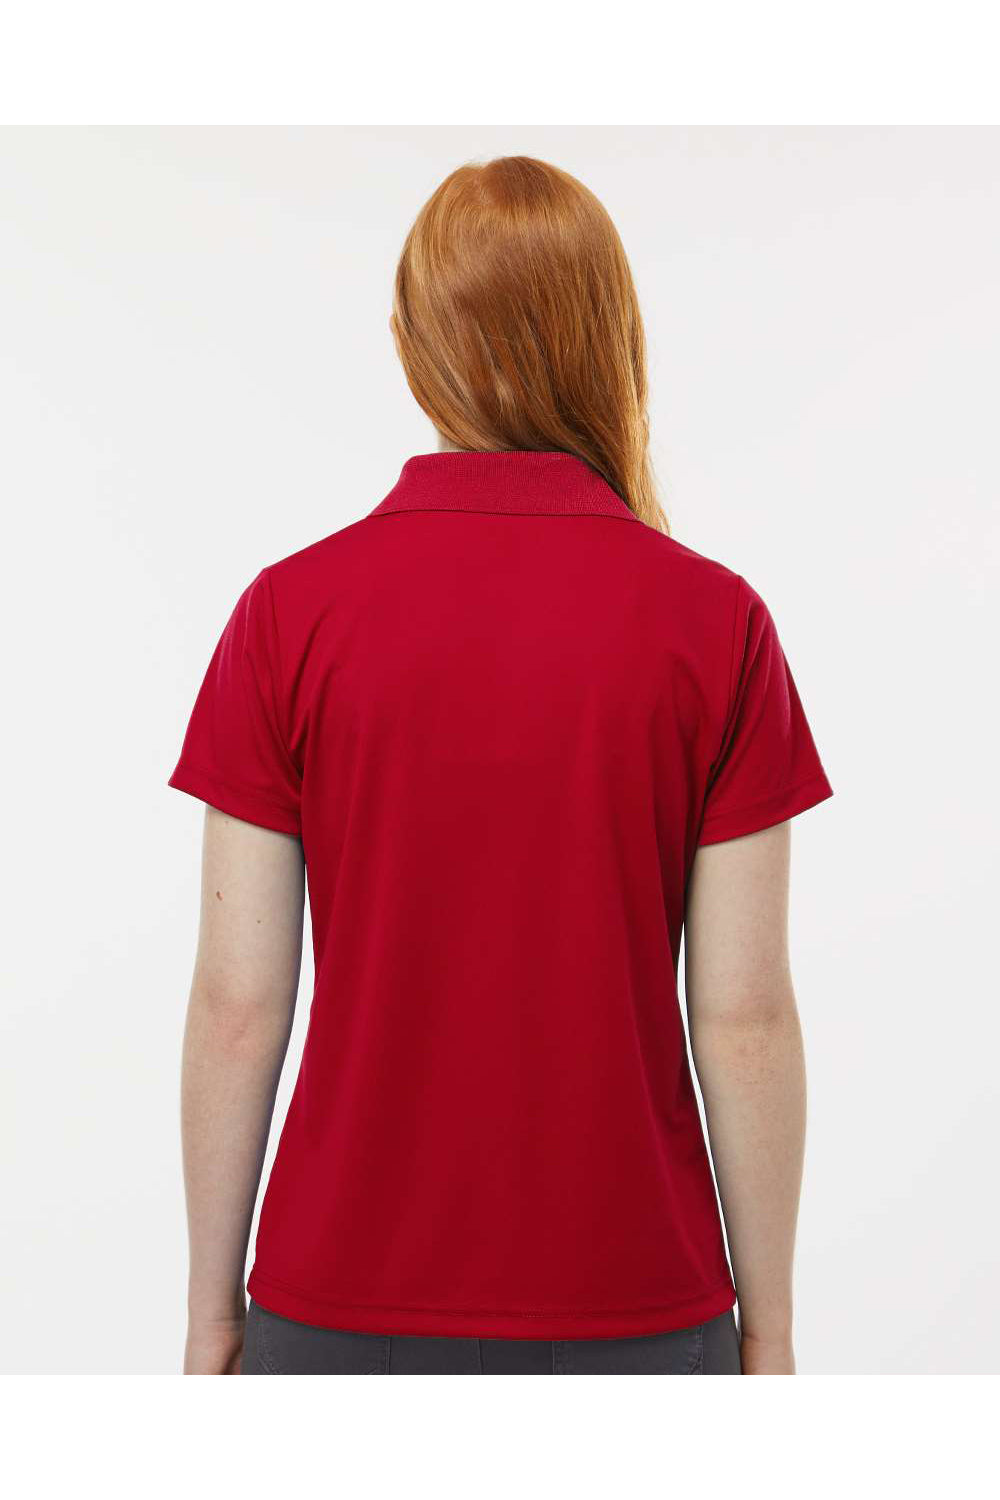 Paragon 504 Womens Sebring Performance Short Sleeve Polo Shirt Deep Red Model Back